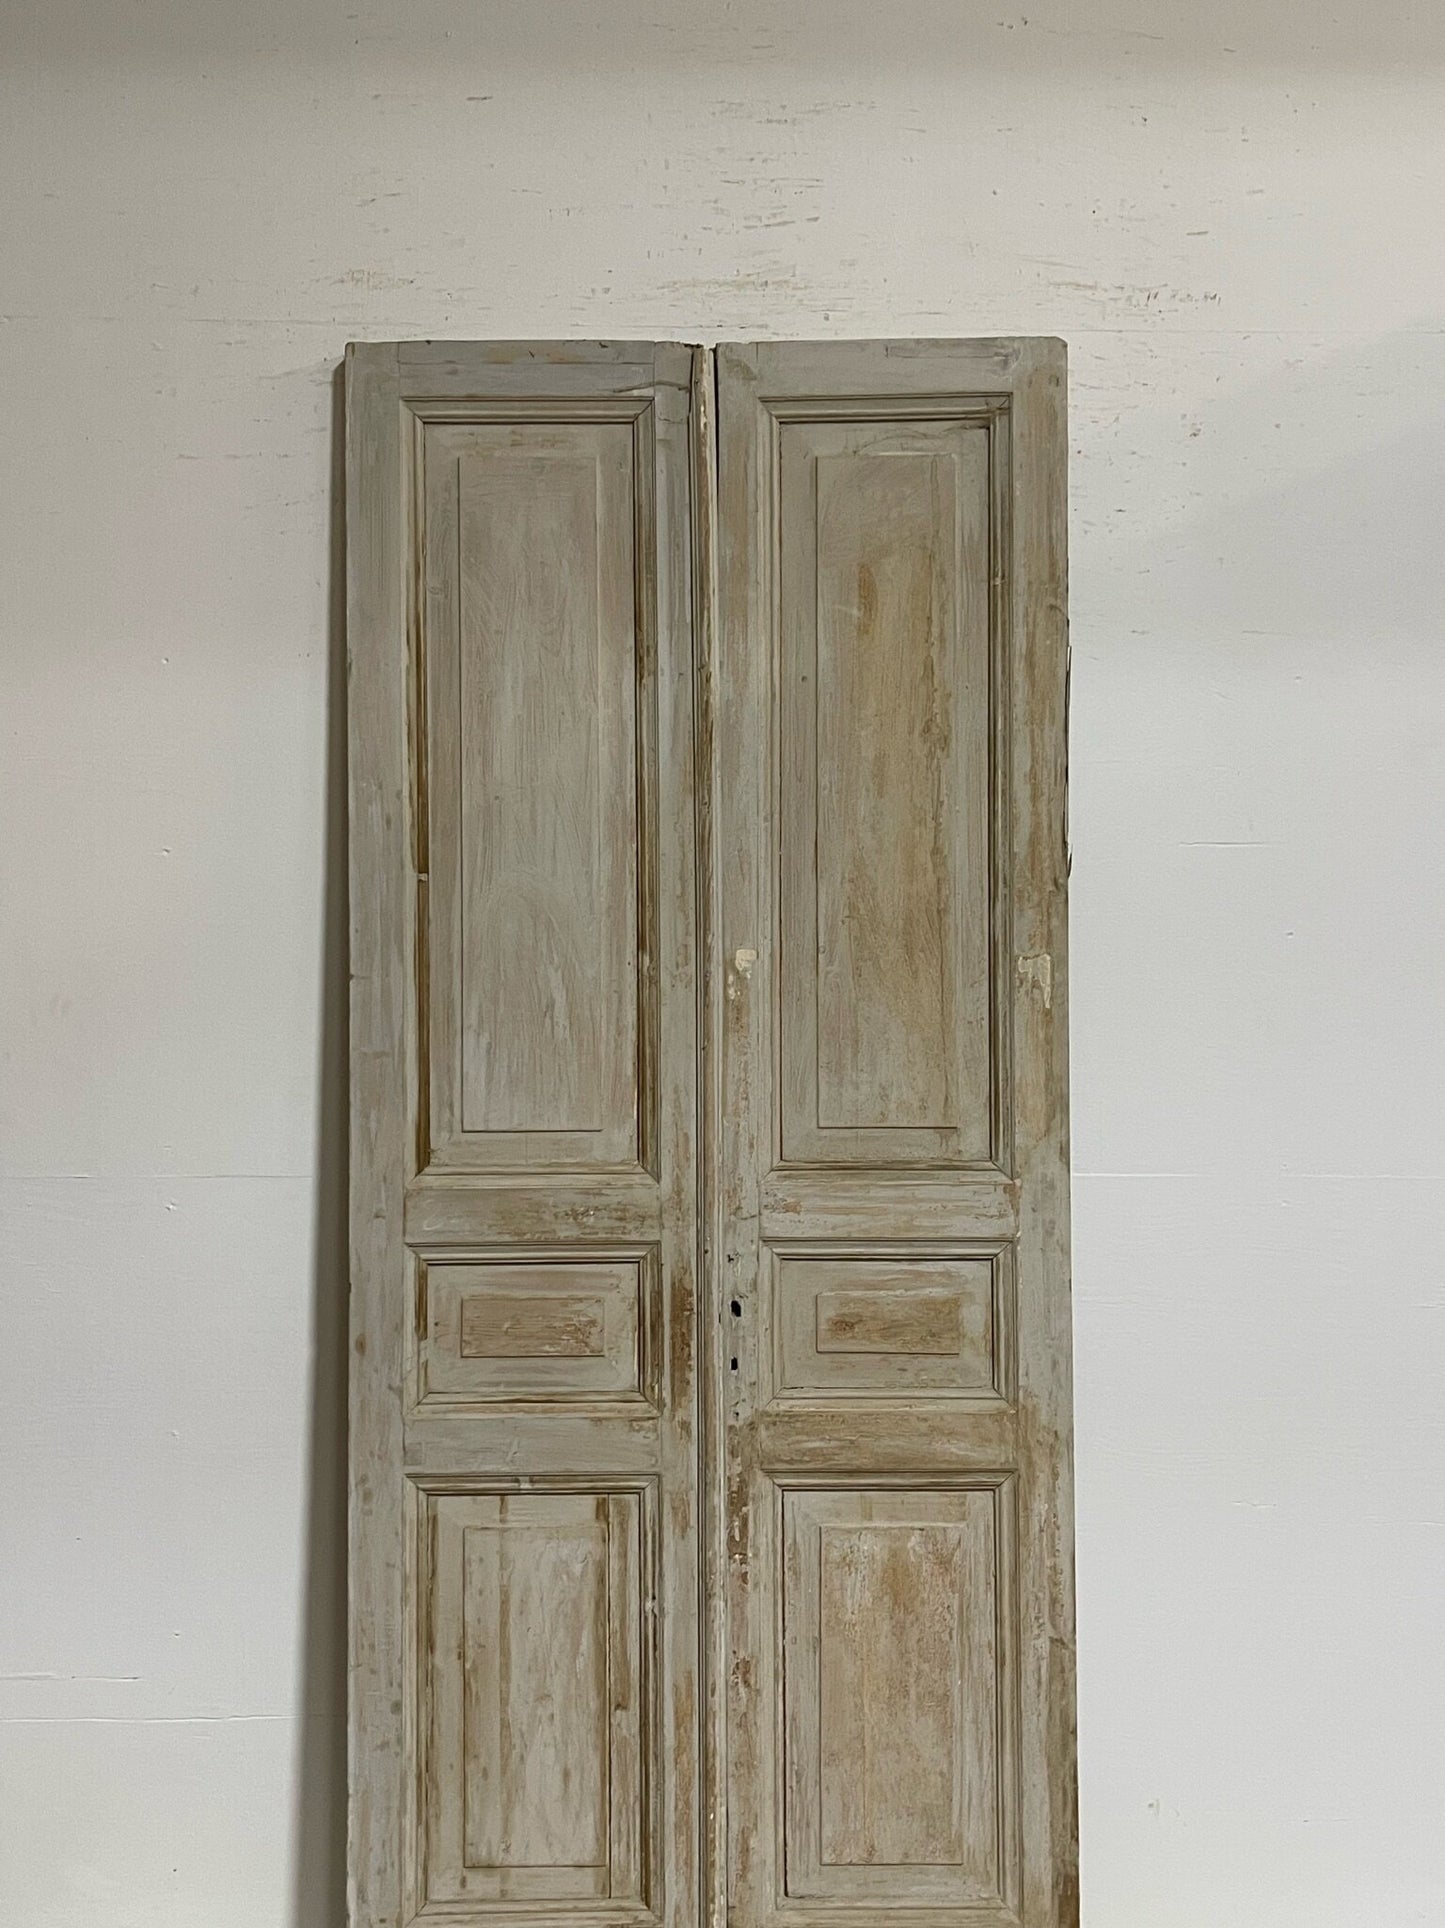 Antique French doors (94.5X39.5) G0108